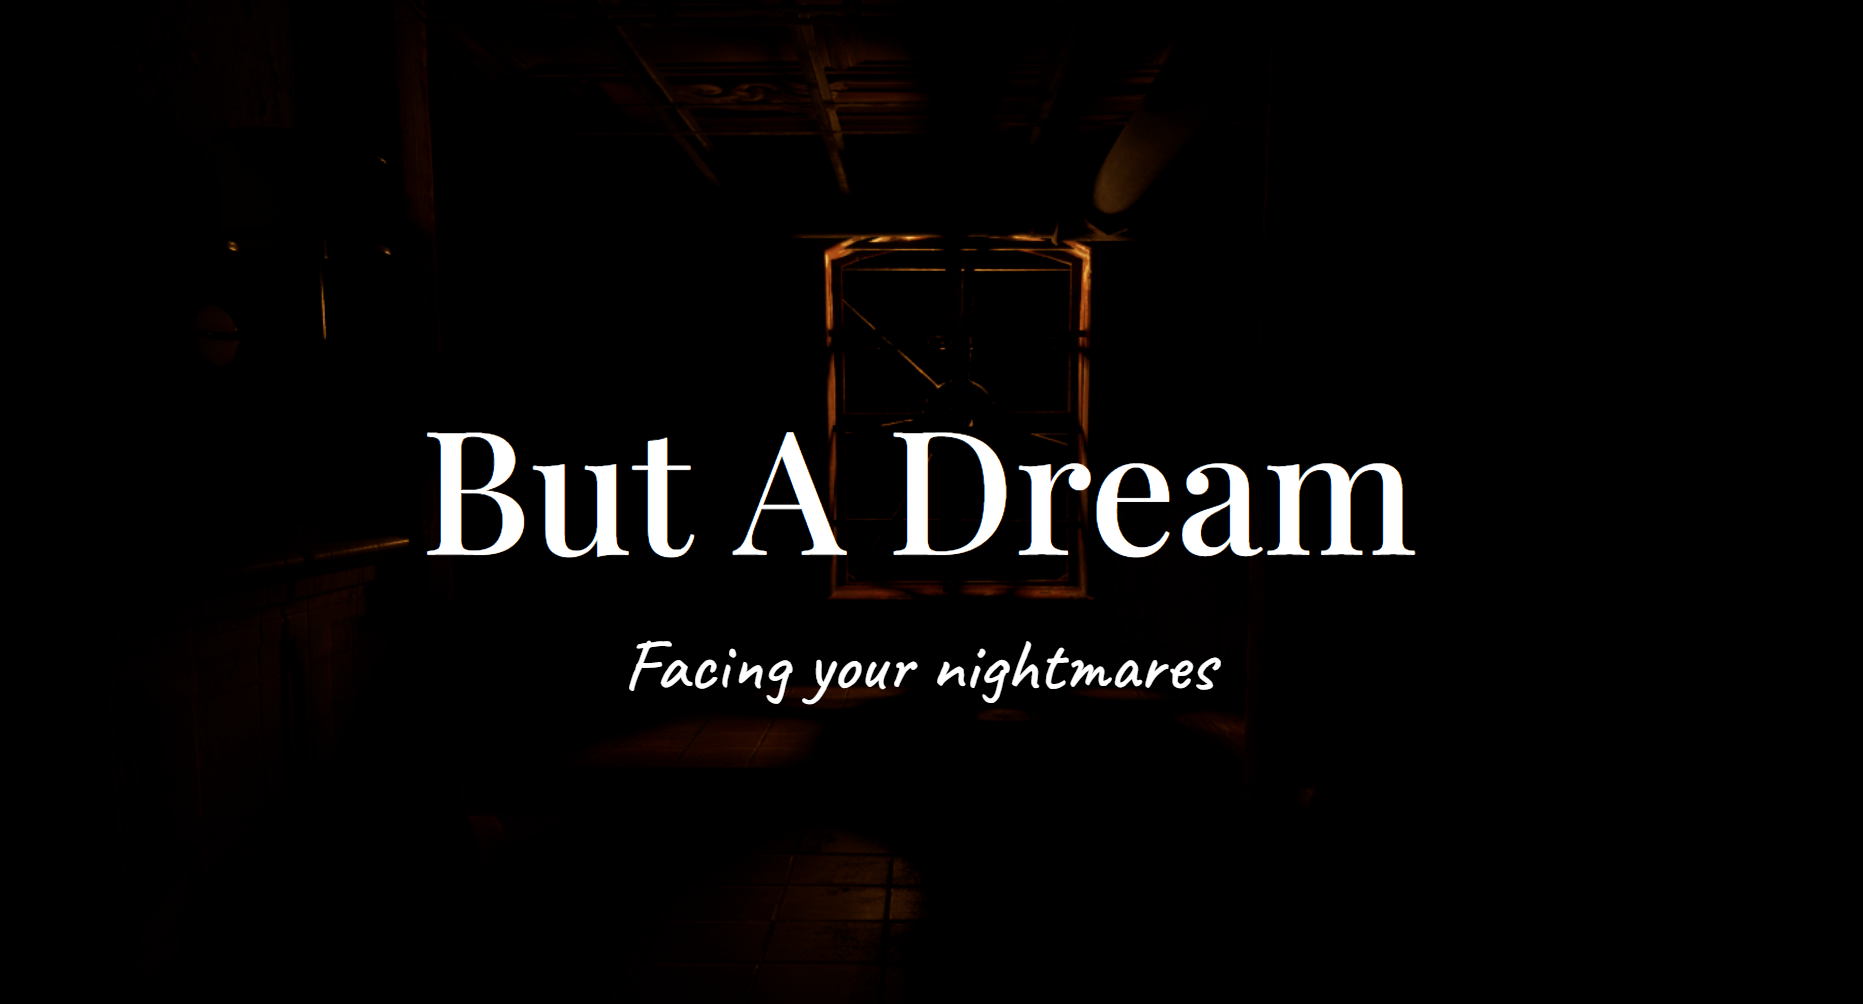 But a Dream